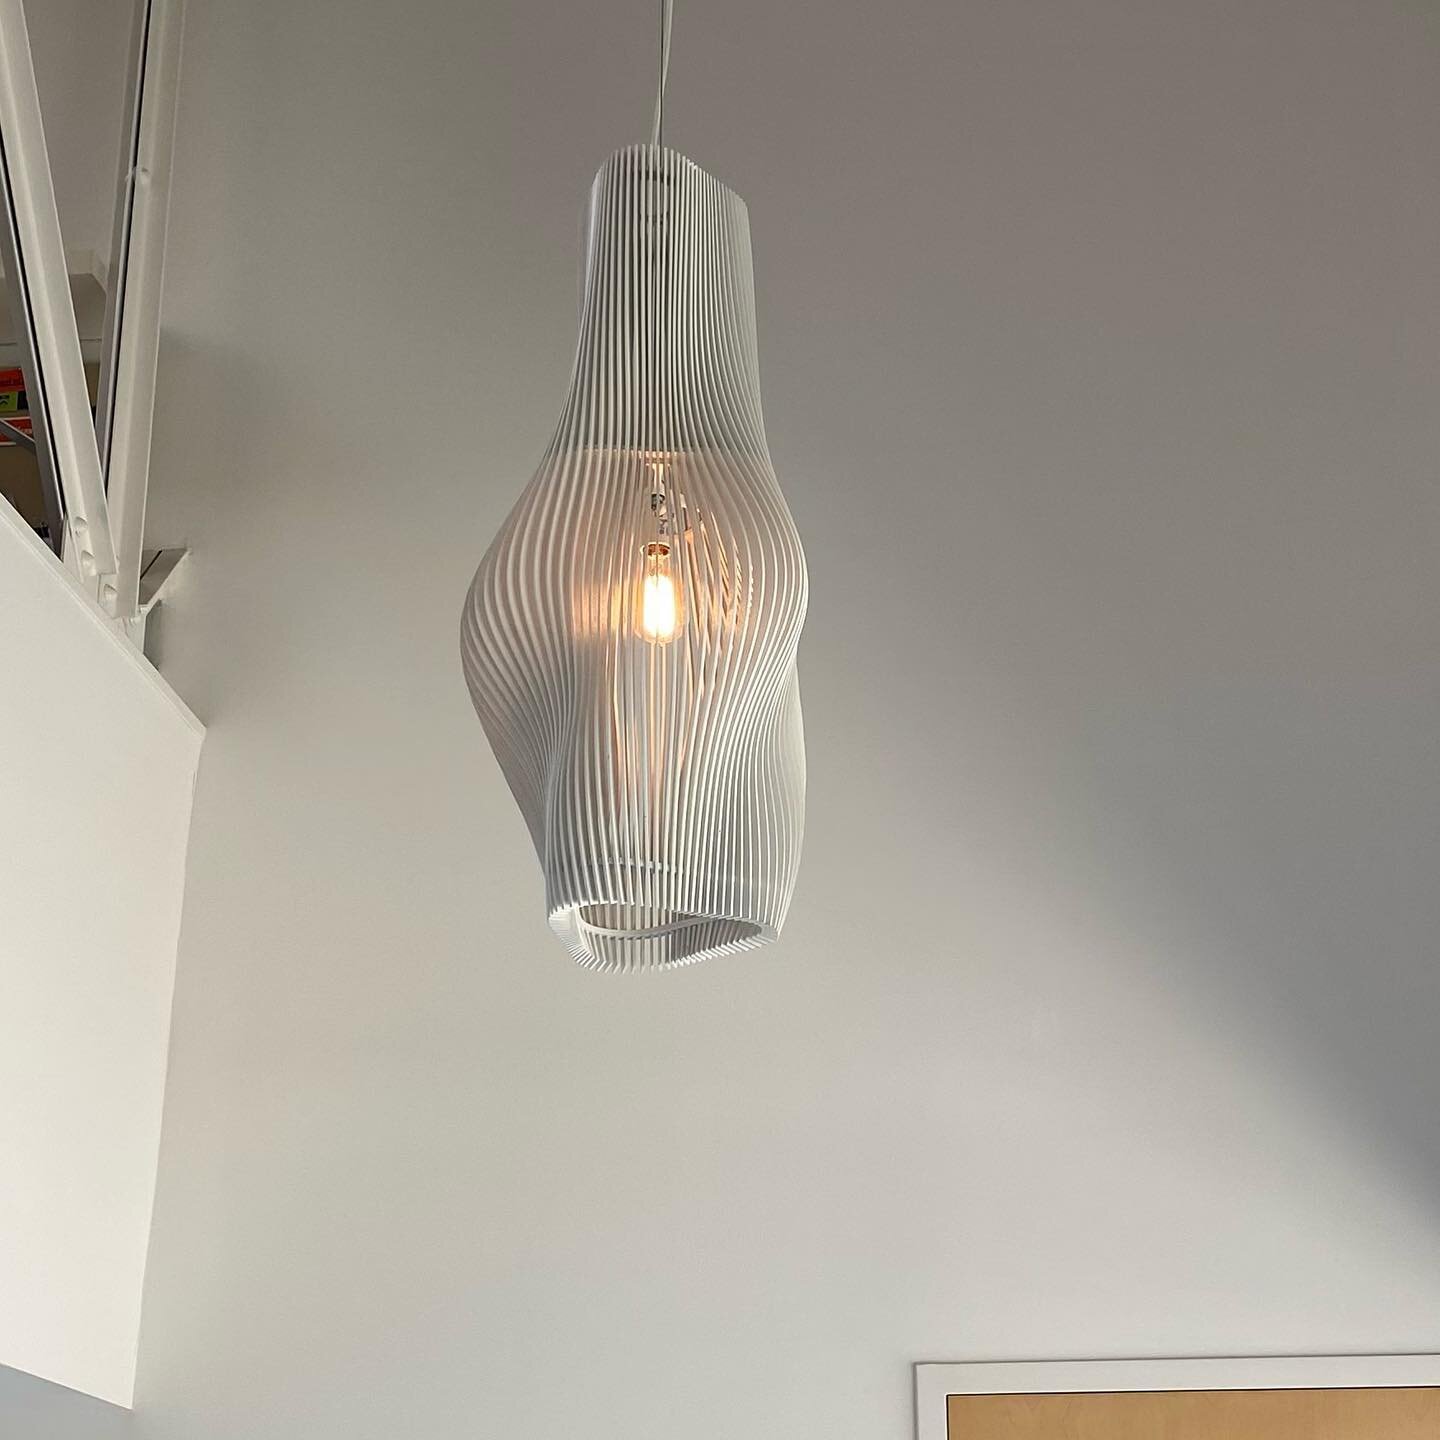 Clove Lamp No. 01 (2011)
-
All white
-
In the offices of @sanderspacearchitecture 
-
#pathfab #pathdesign #lightingdesign #productdesign #lighting #digitalfabrication #digitalcraft #parametricdesign